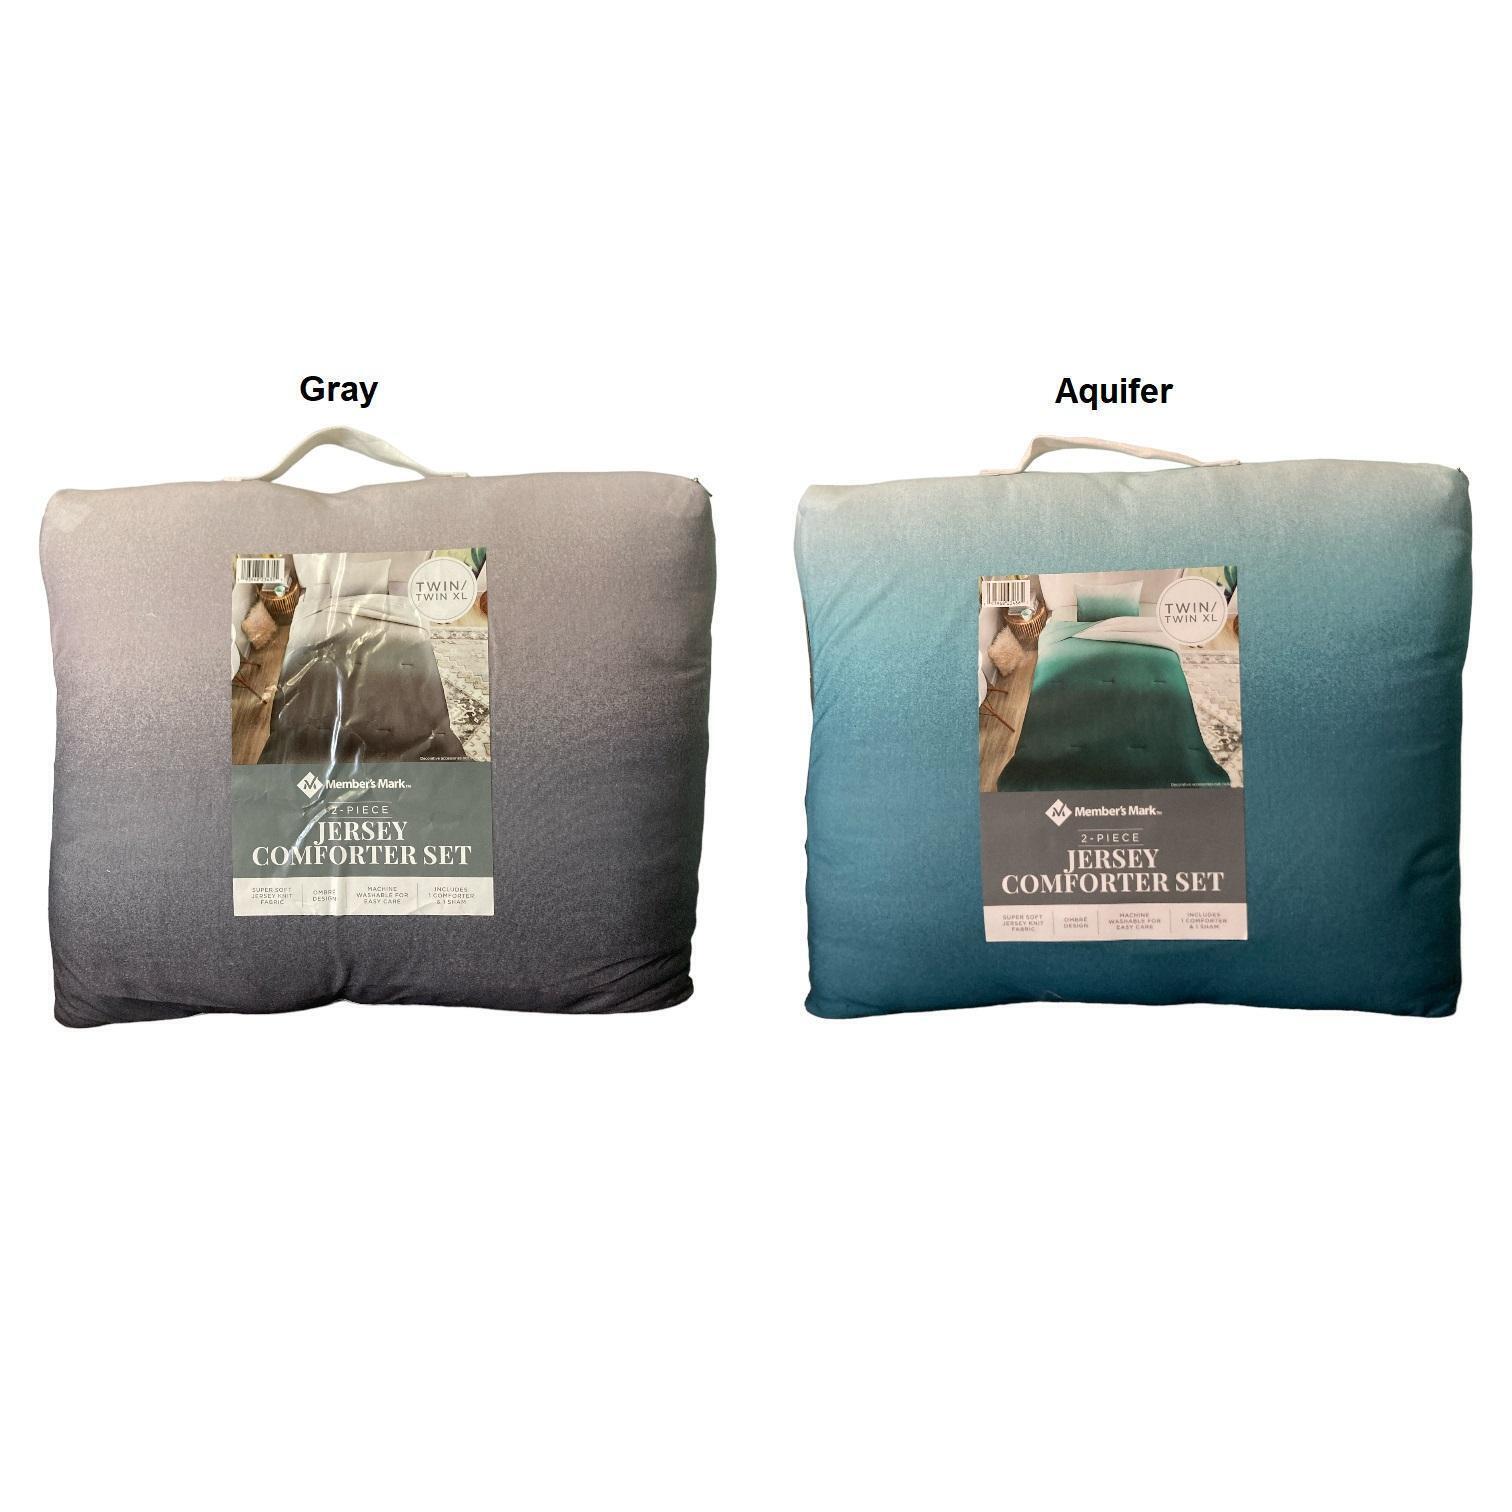 Member's Mark Super Soft Ombre Jersey Comforter & Sham Set, Twin/Twin XL